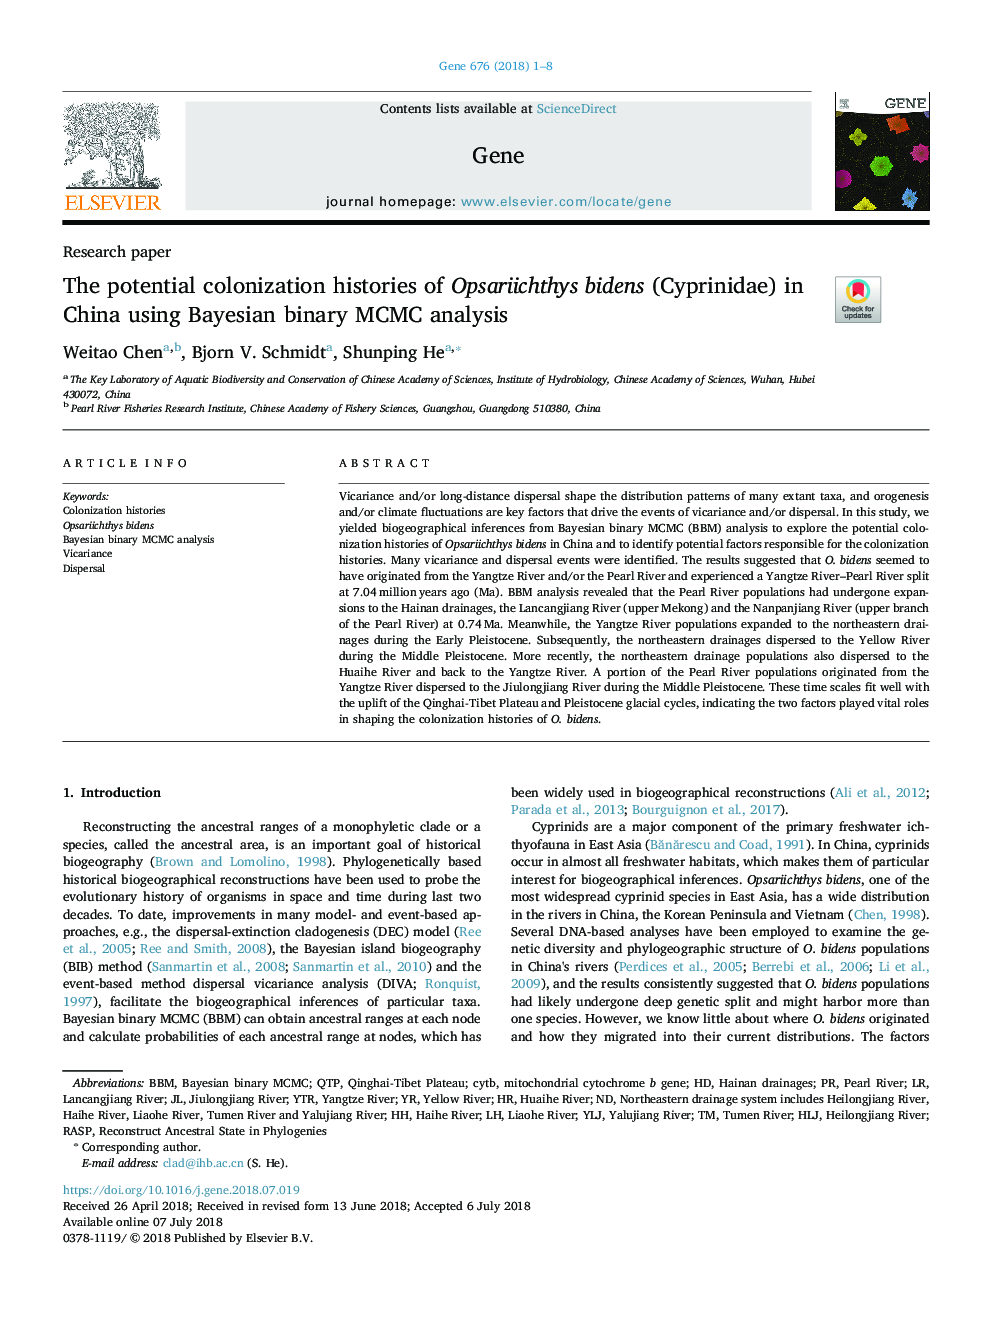 The potential colonization histories of Opsariichthys bidens (Cyprinidae) in China using Bayesian binary MCMC analysis